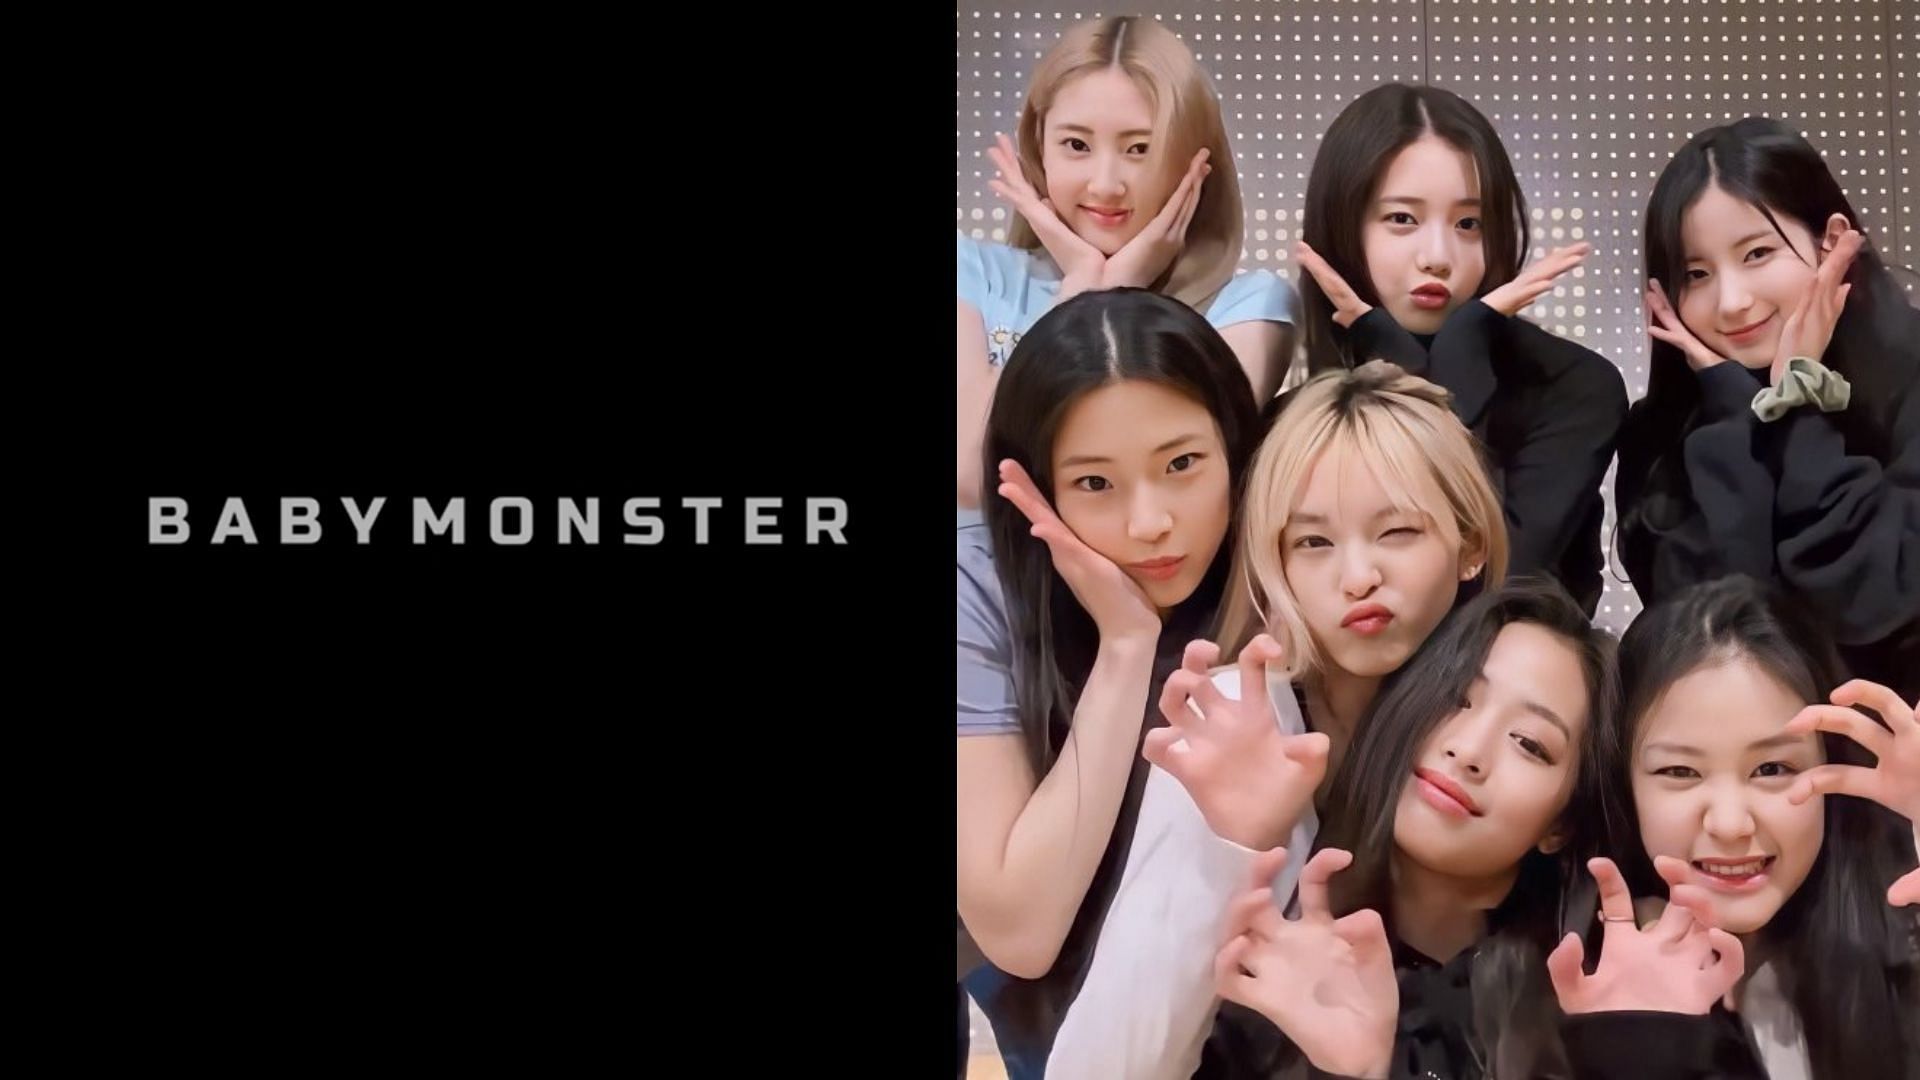 Baby monster profiles. Baby Monster kpop группа. Babymonster корейская группа. Babymonster участницы группы. Рора Baby Monster.